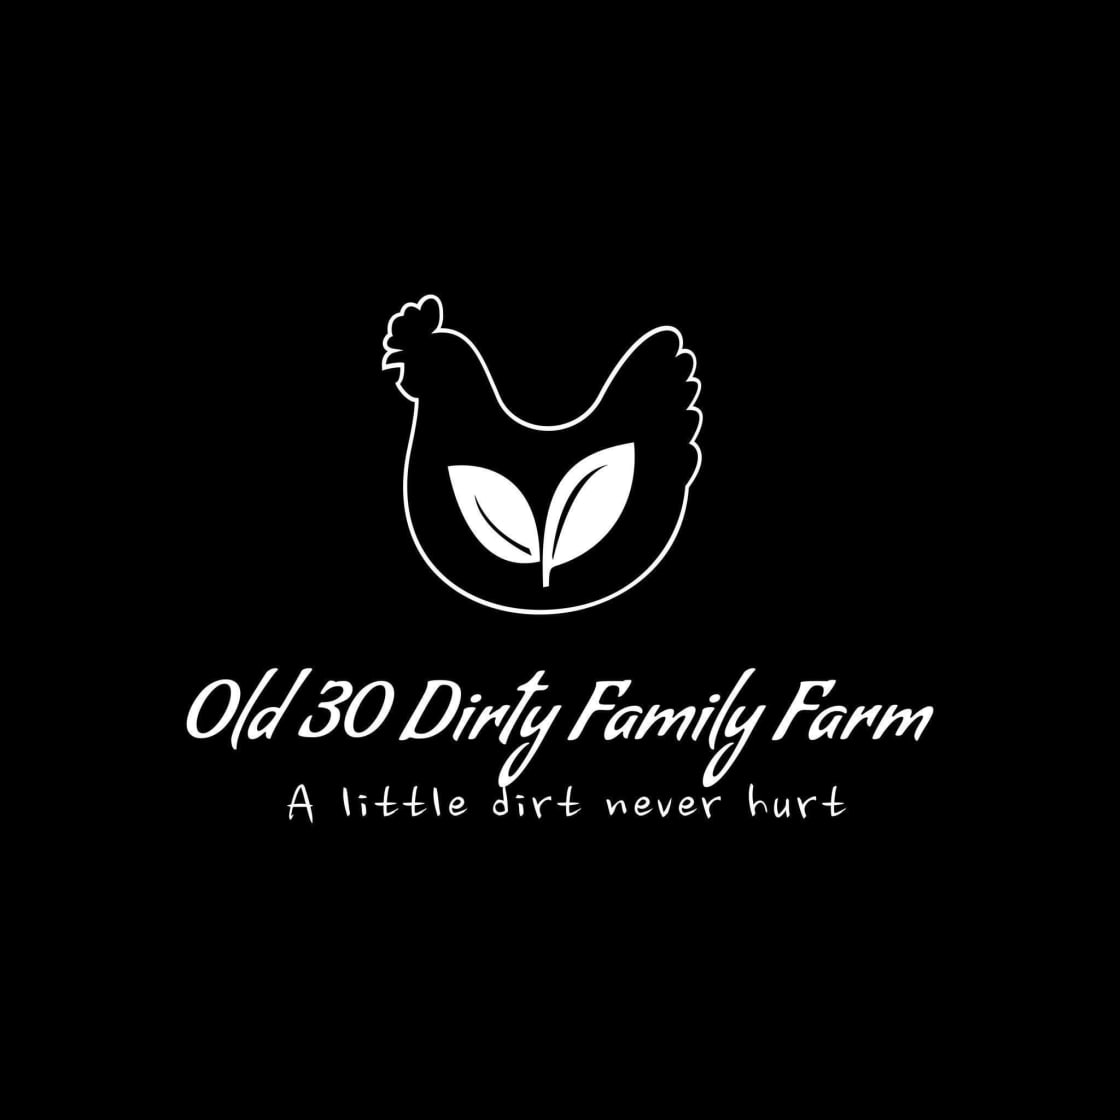 Old 30 Dirty Family Farm